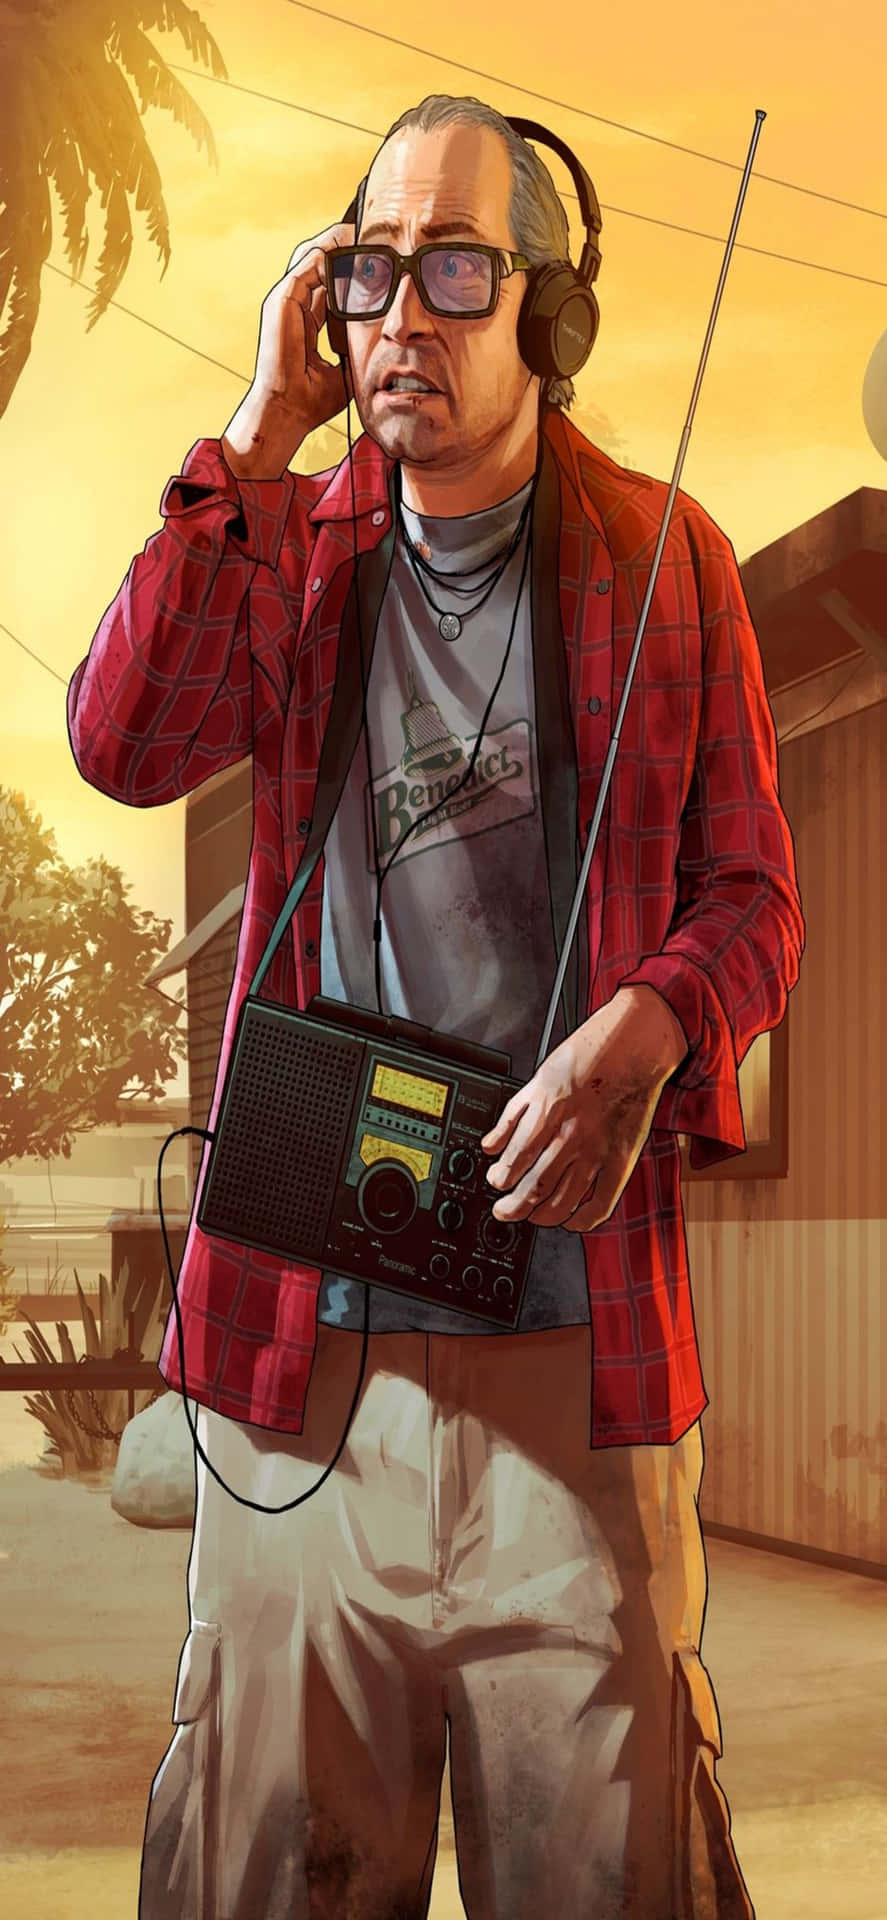 Iphone X Grand Theft Auto V Background&Ron Jakowski